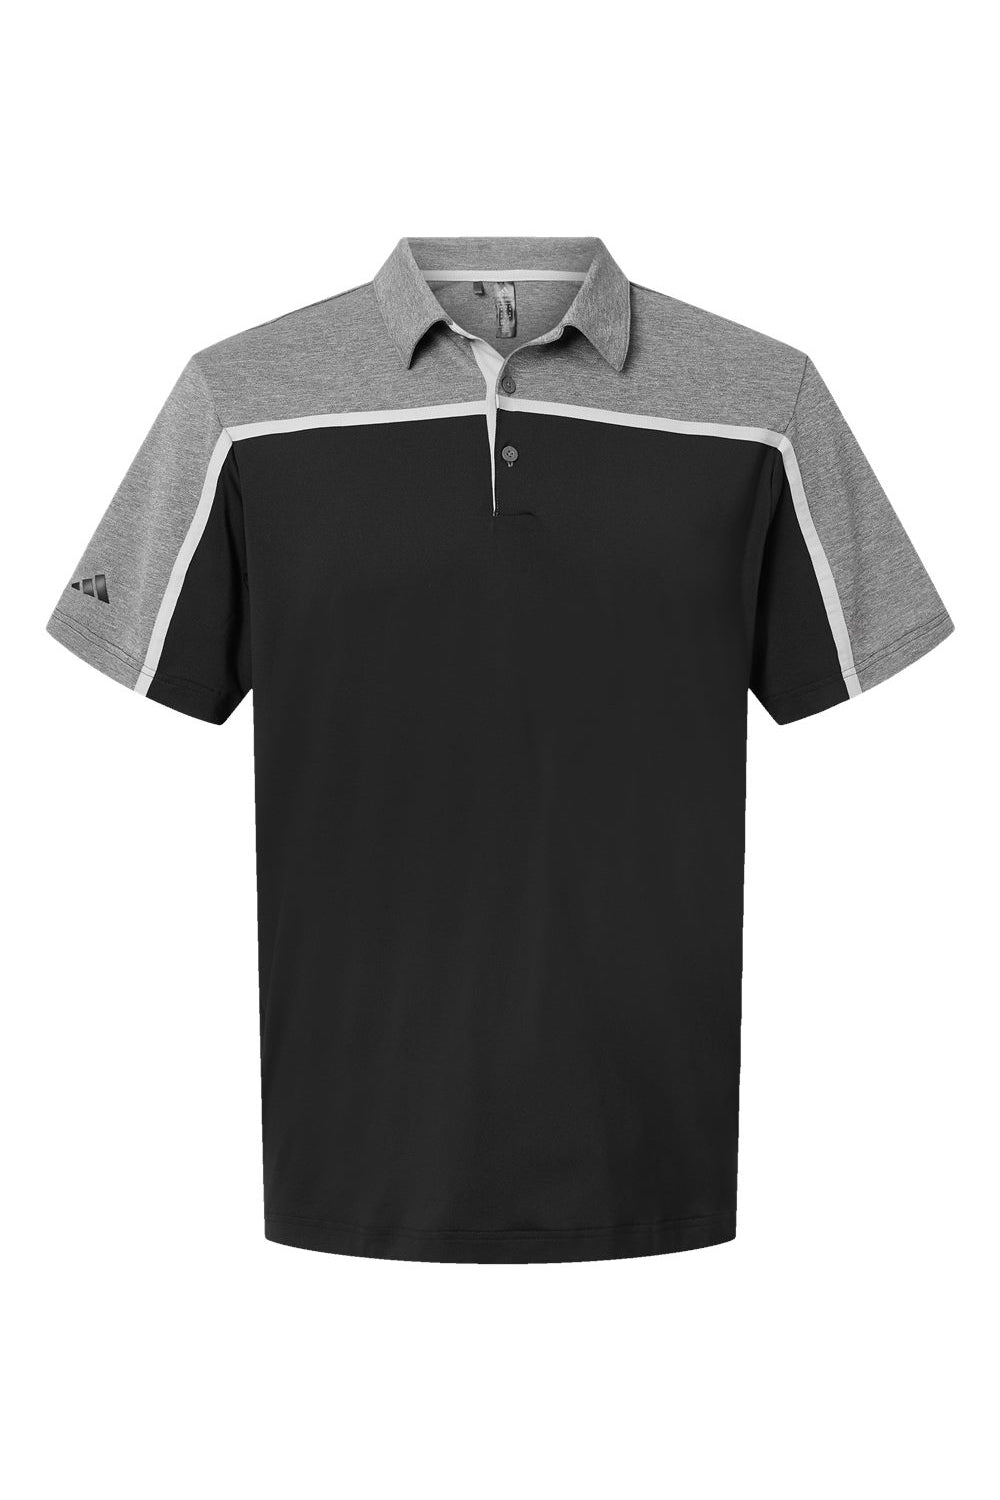 Adidas A512 Mens Ultimate Colorblocked Short Sleeve Polo Shirt Black/Grey/Grey Melange Flat Front